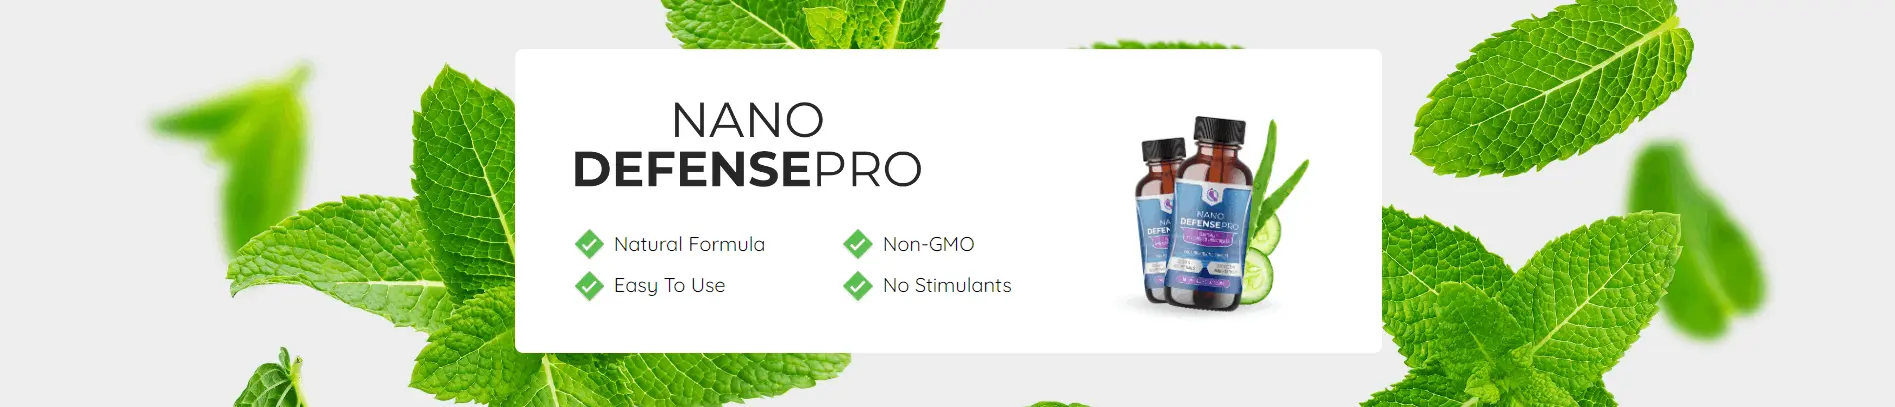 NanoDefense Pro Label